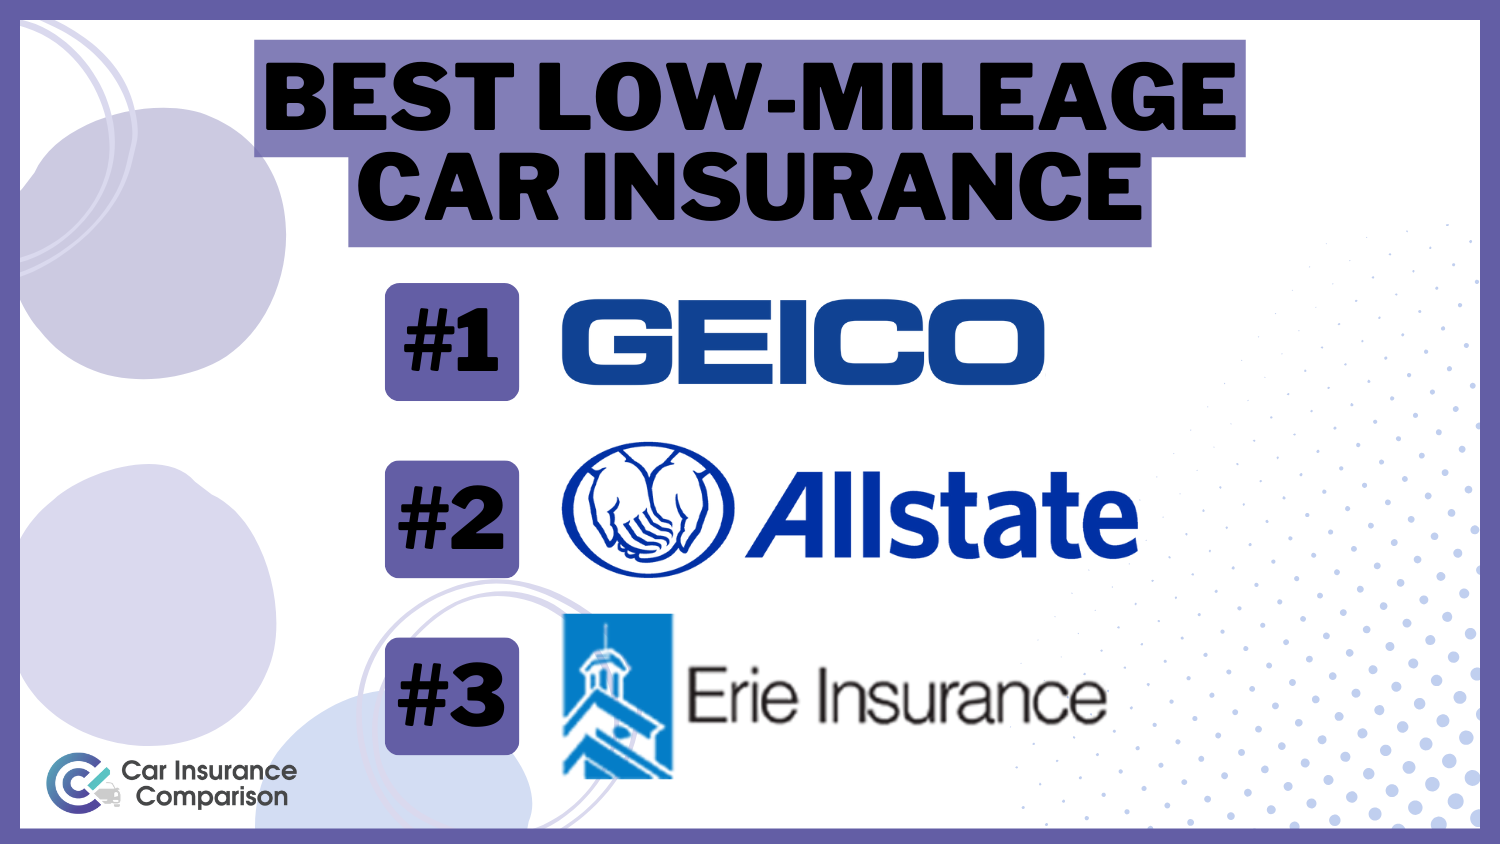 3 Best Low-Mileage Car Insurance: Geico, Allstate, Erie